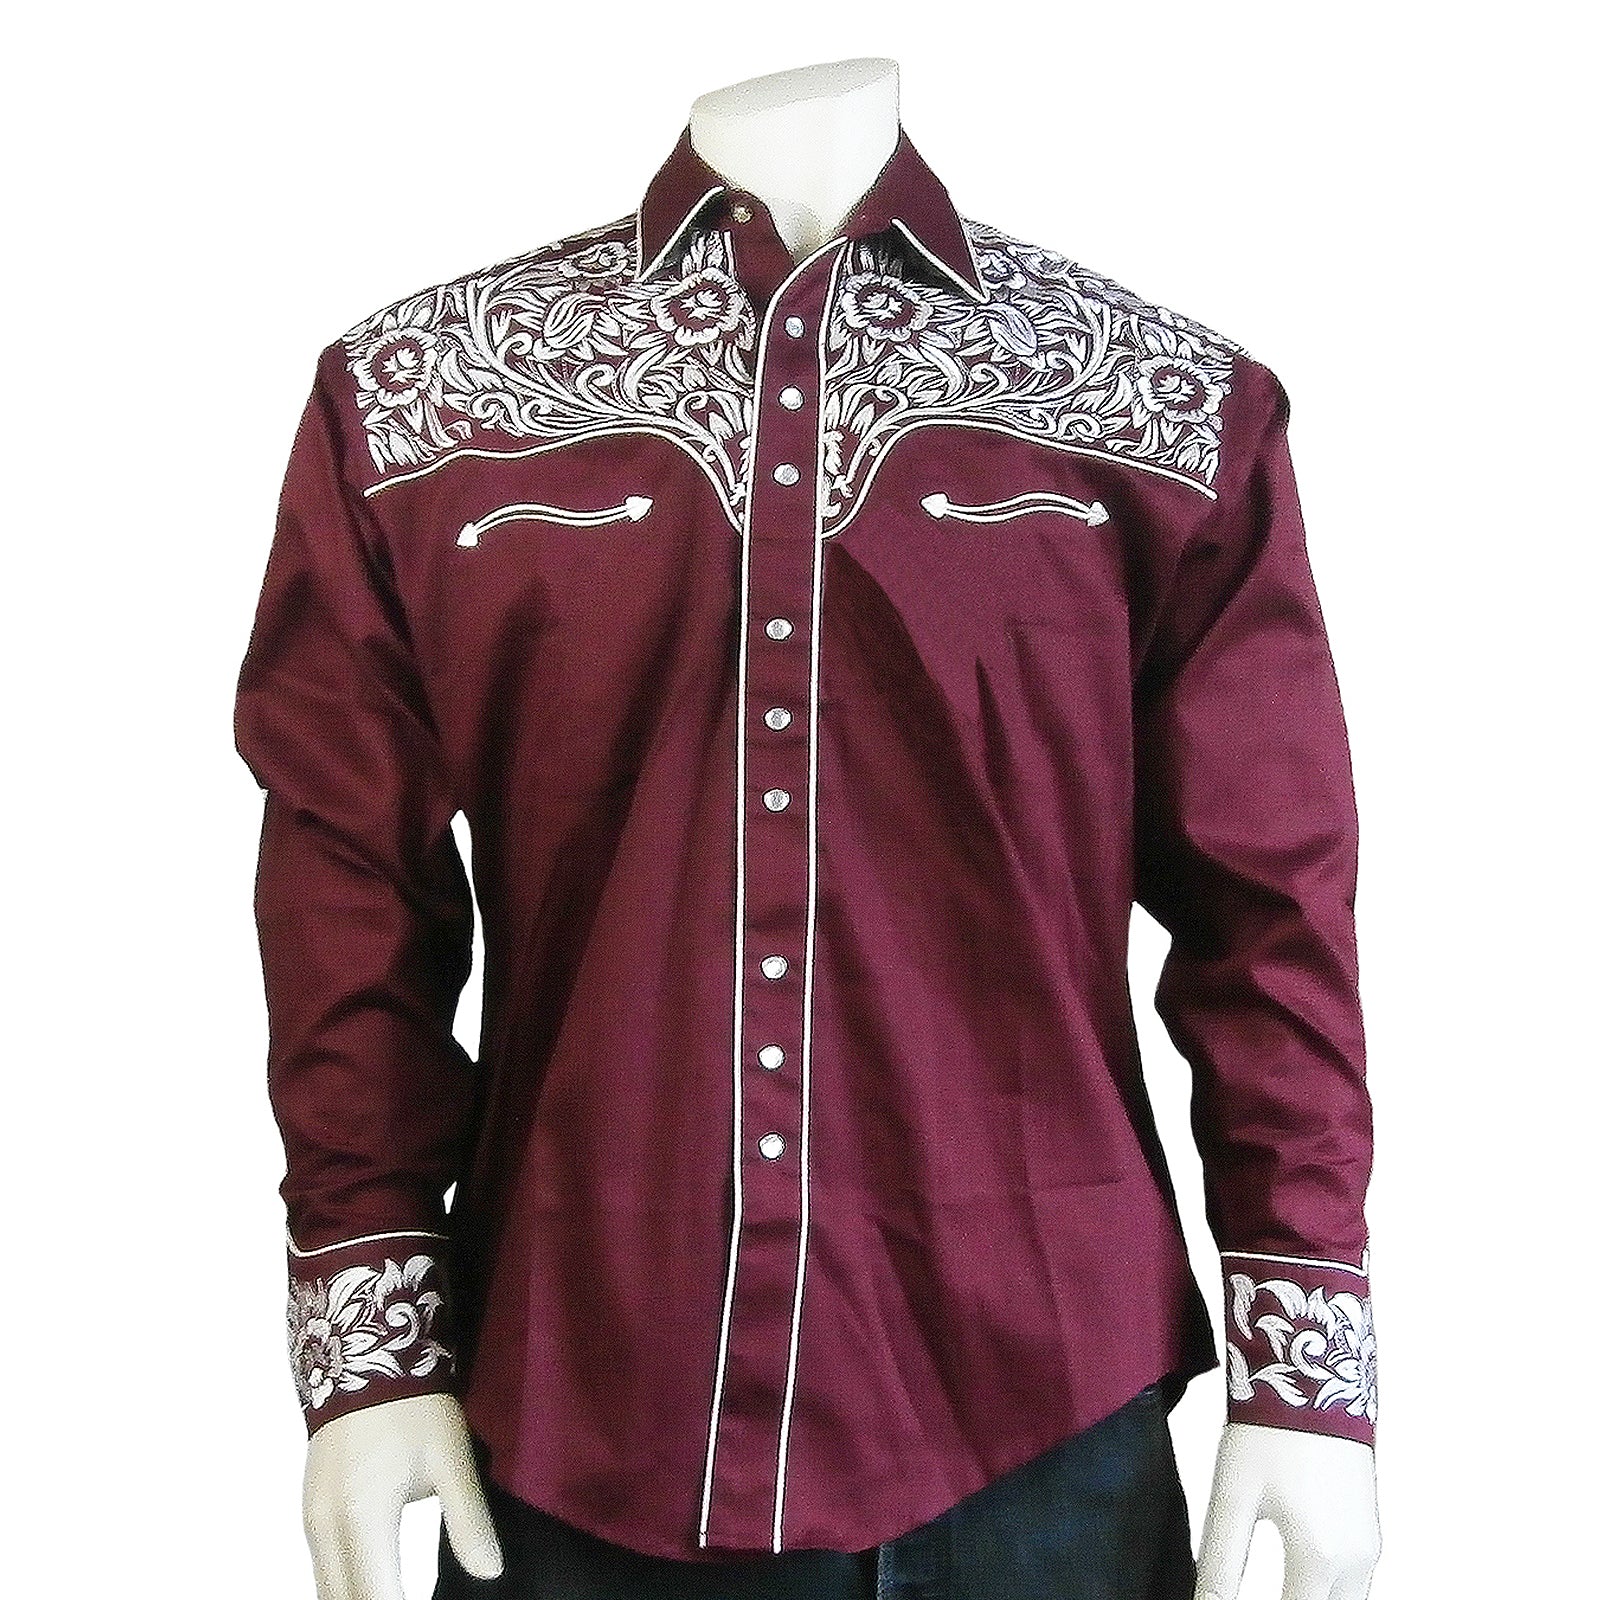 Men's Vintage Tooling Embroidered Burgundy & Silver Western Shirt